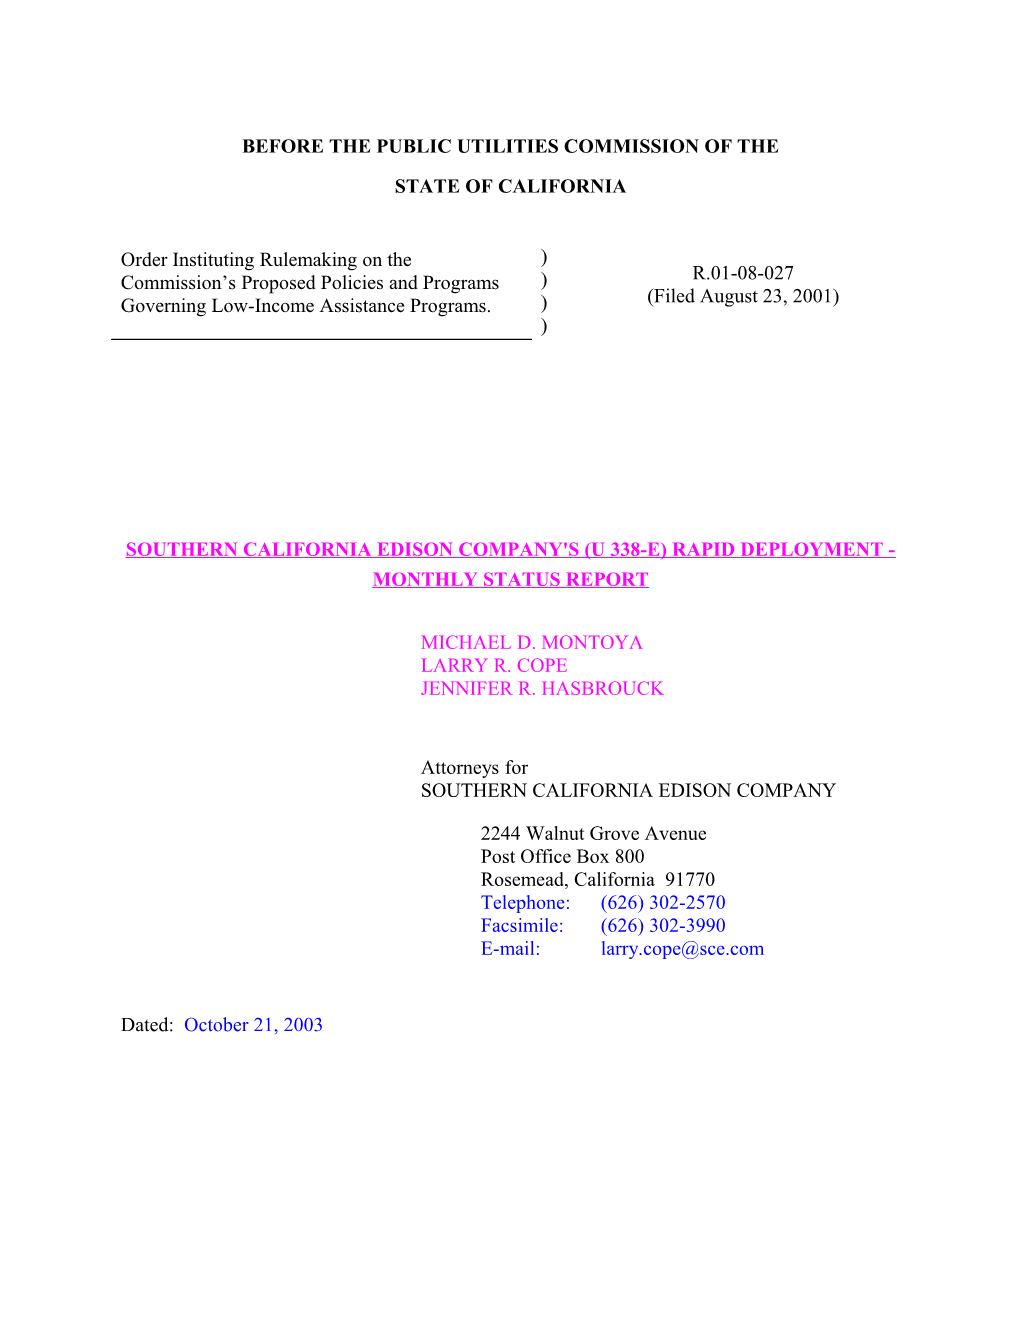 Southern California Edison Company's (U 338-E) Rapid Deployment - MONTHLY Status Report